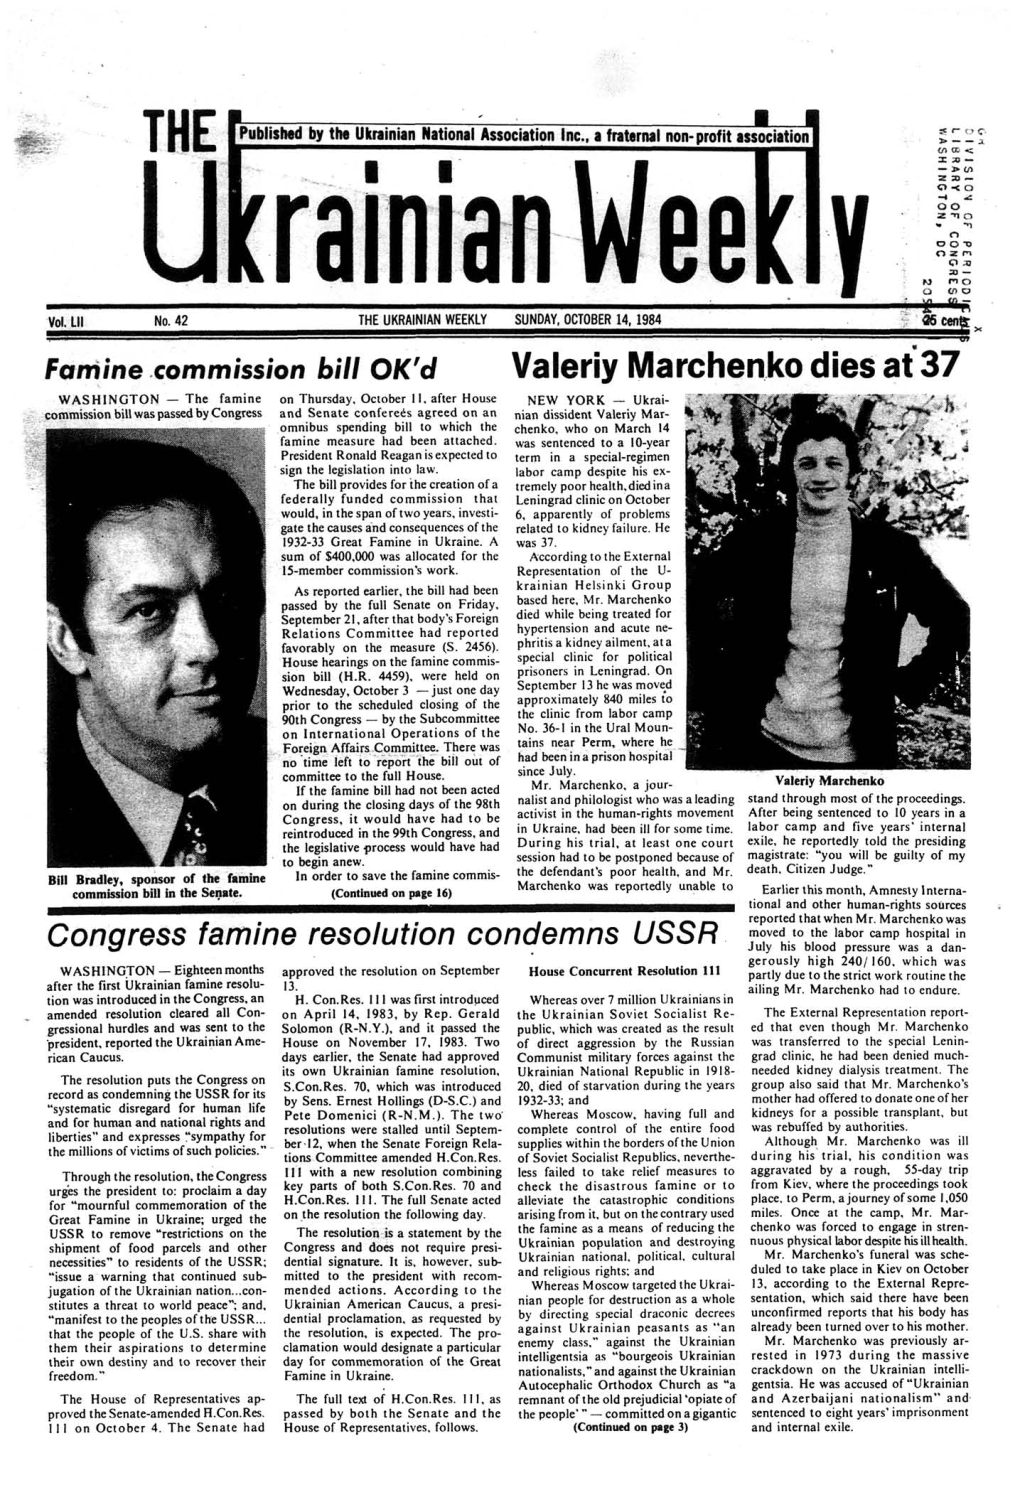 The Ukrainian Weekly 1984, No.42